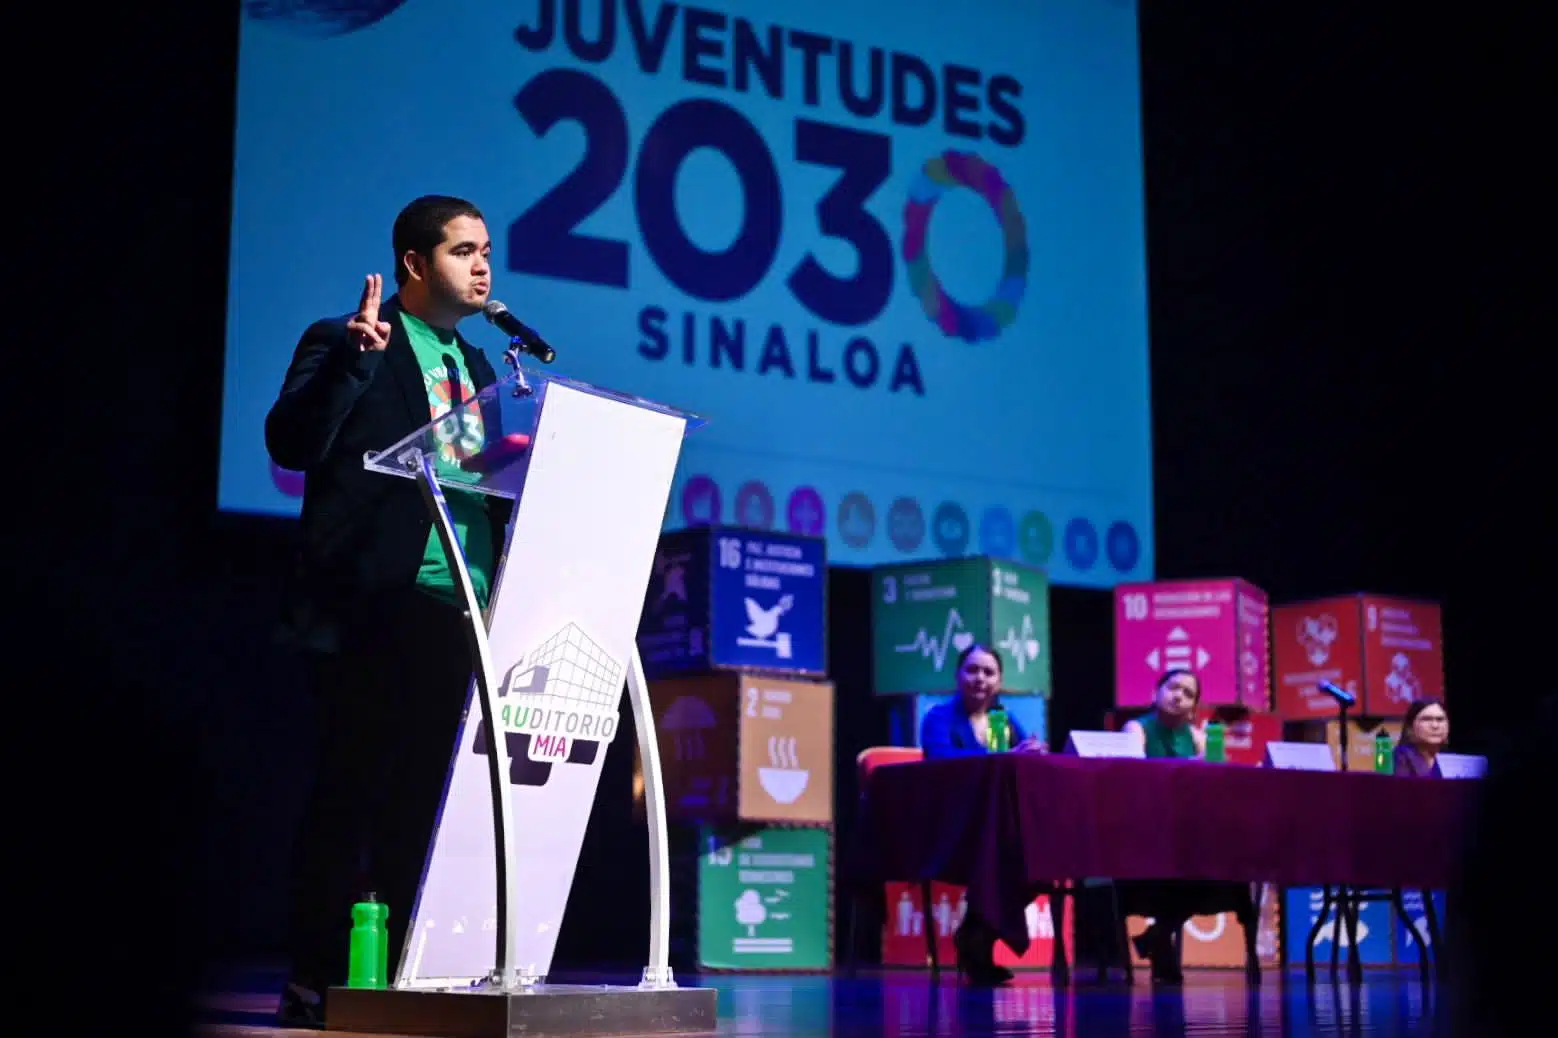 programa Juventudes 2030 en Sinaloa